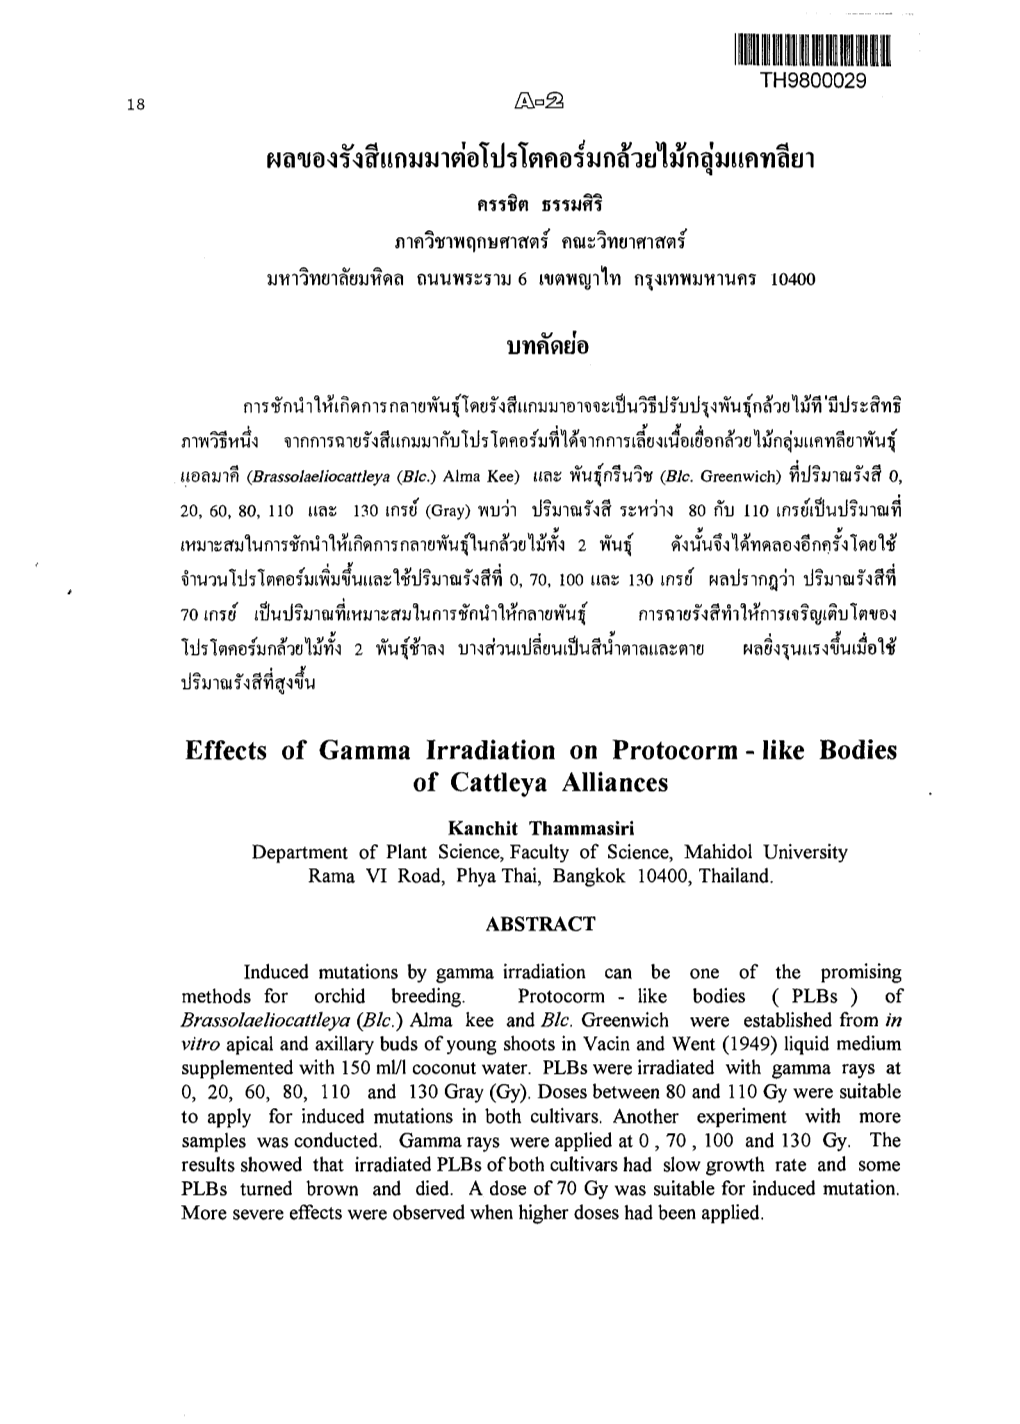 Effects of Gamma Irradiation on Protocorm - Like Bodies of Cattleya Alliances